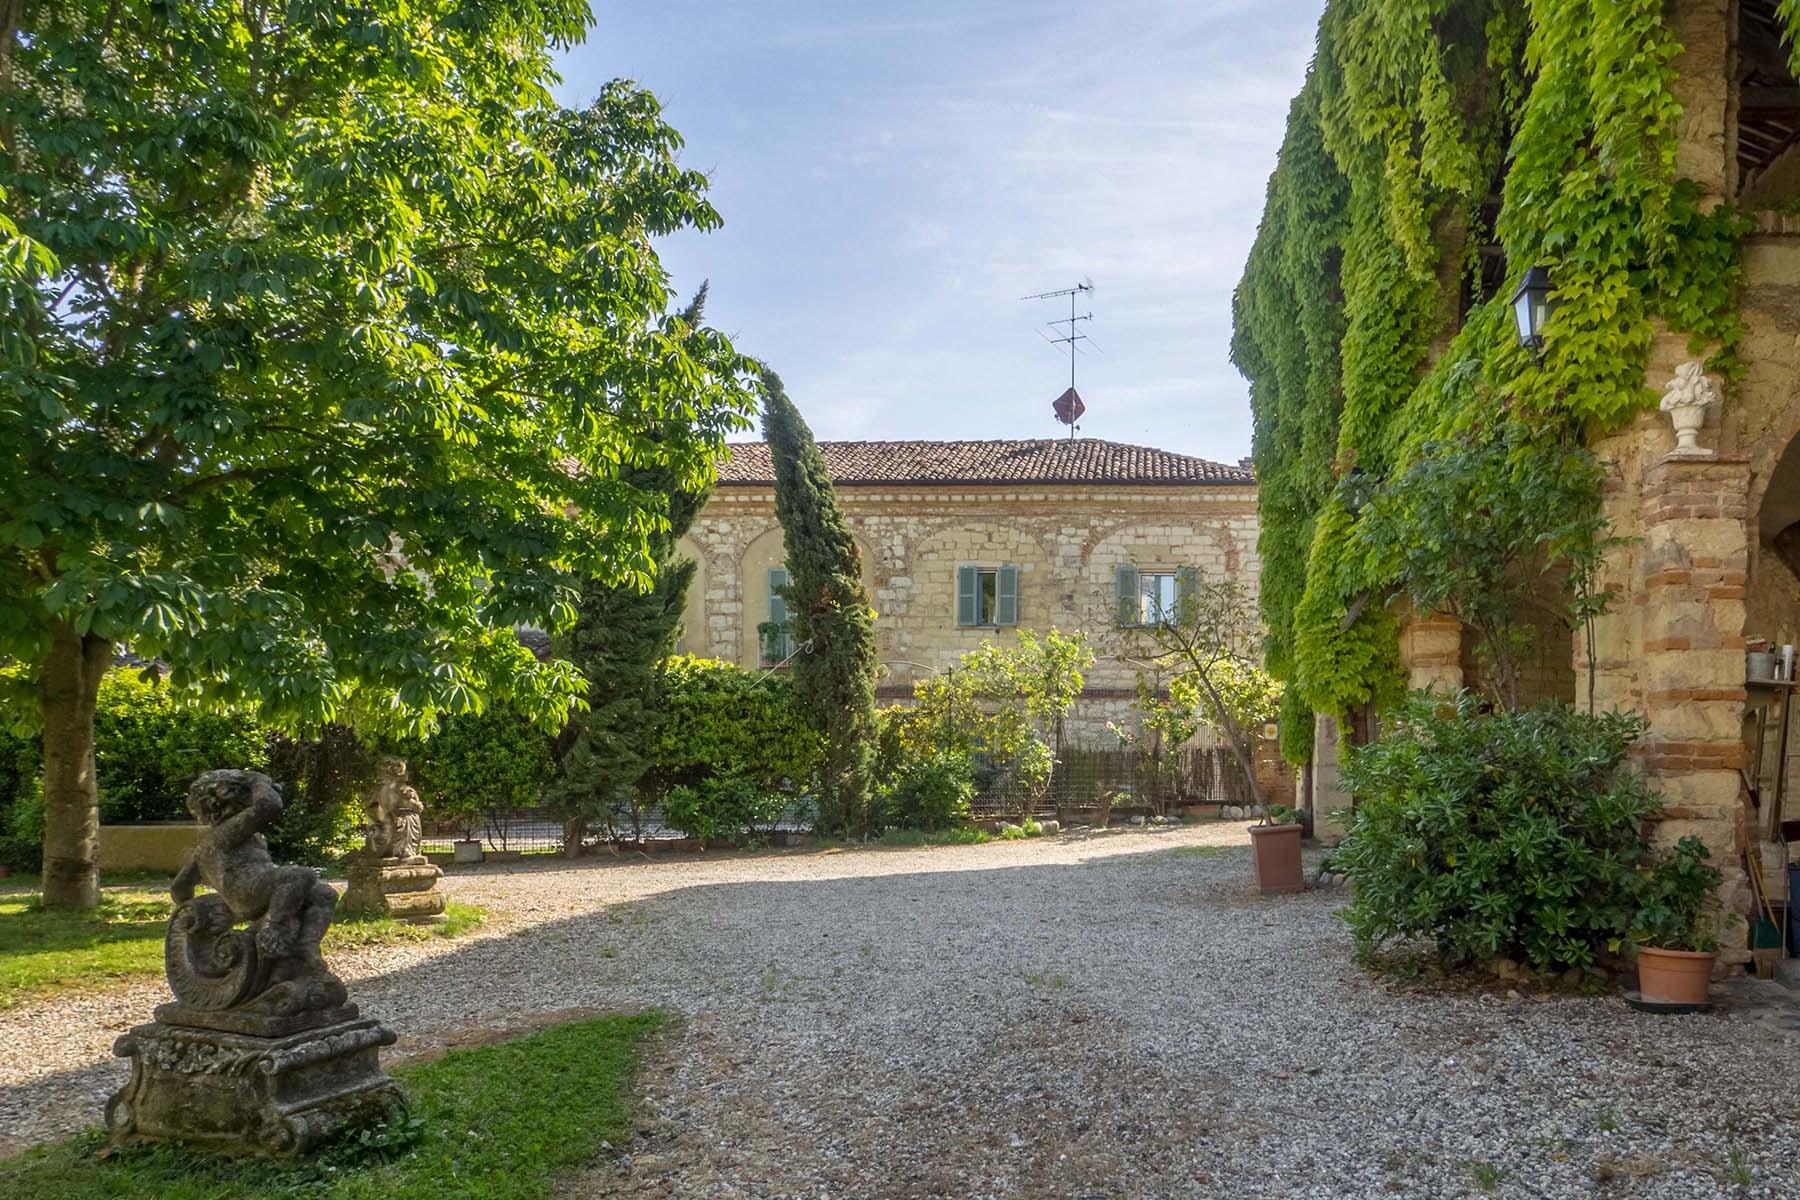 Enchanting historical villa in the heart of the Monferrato region - 30